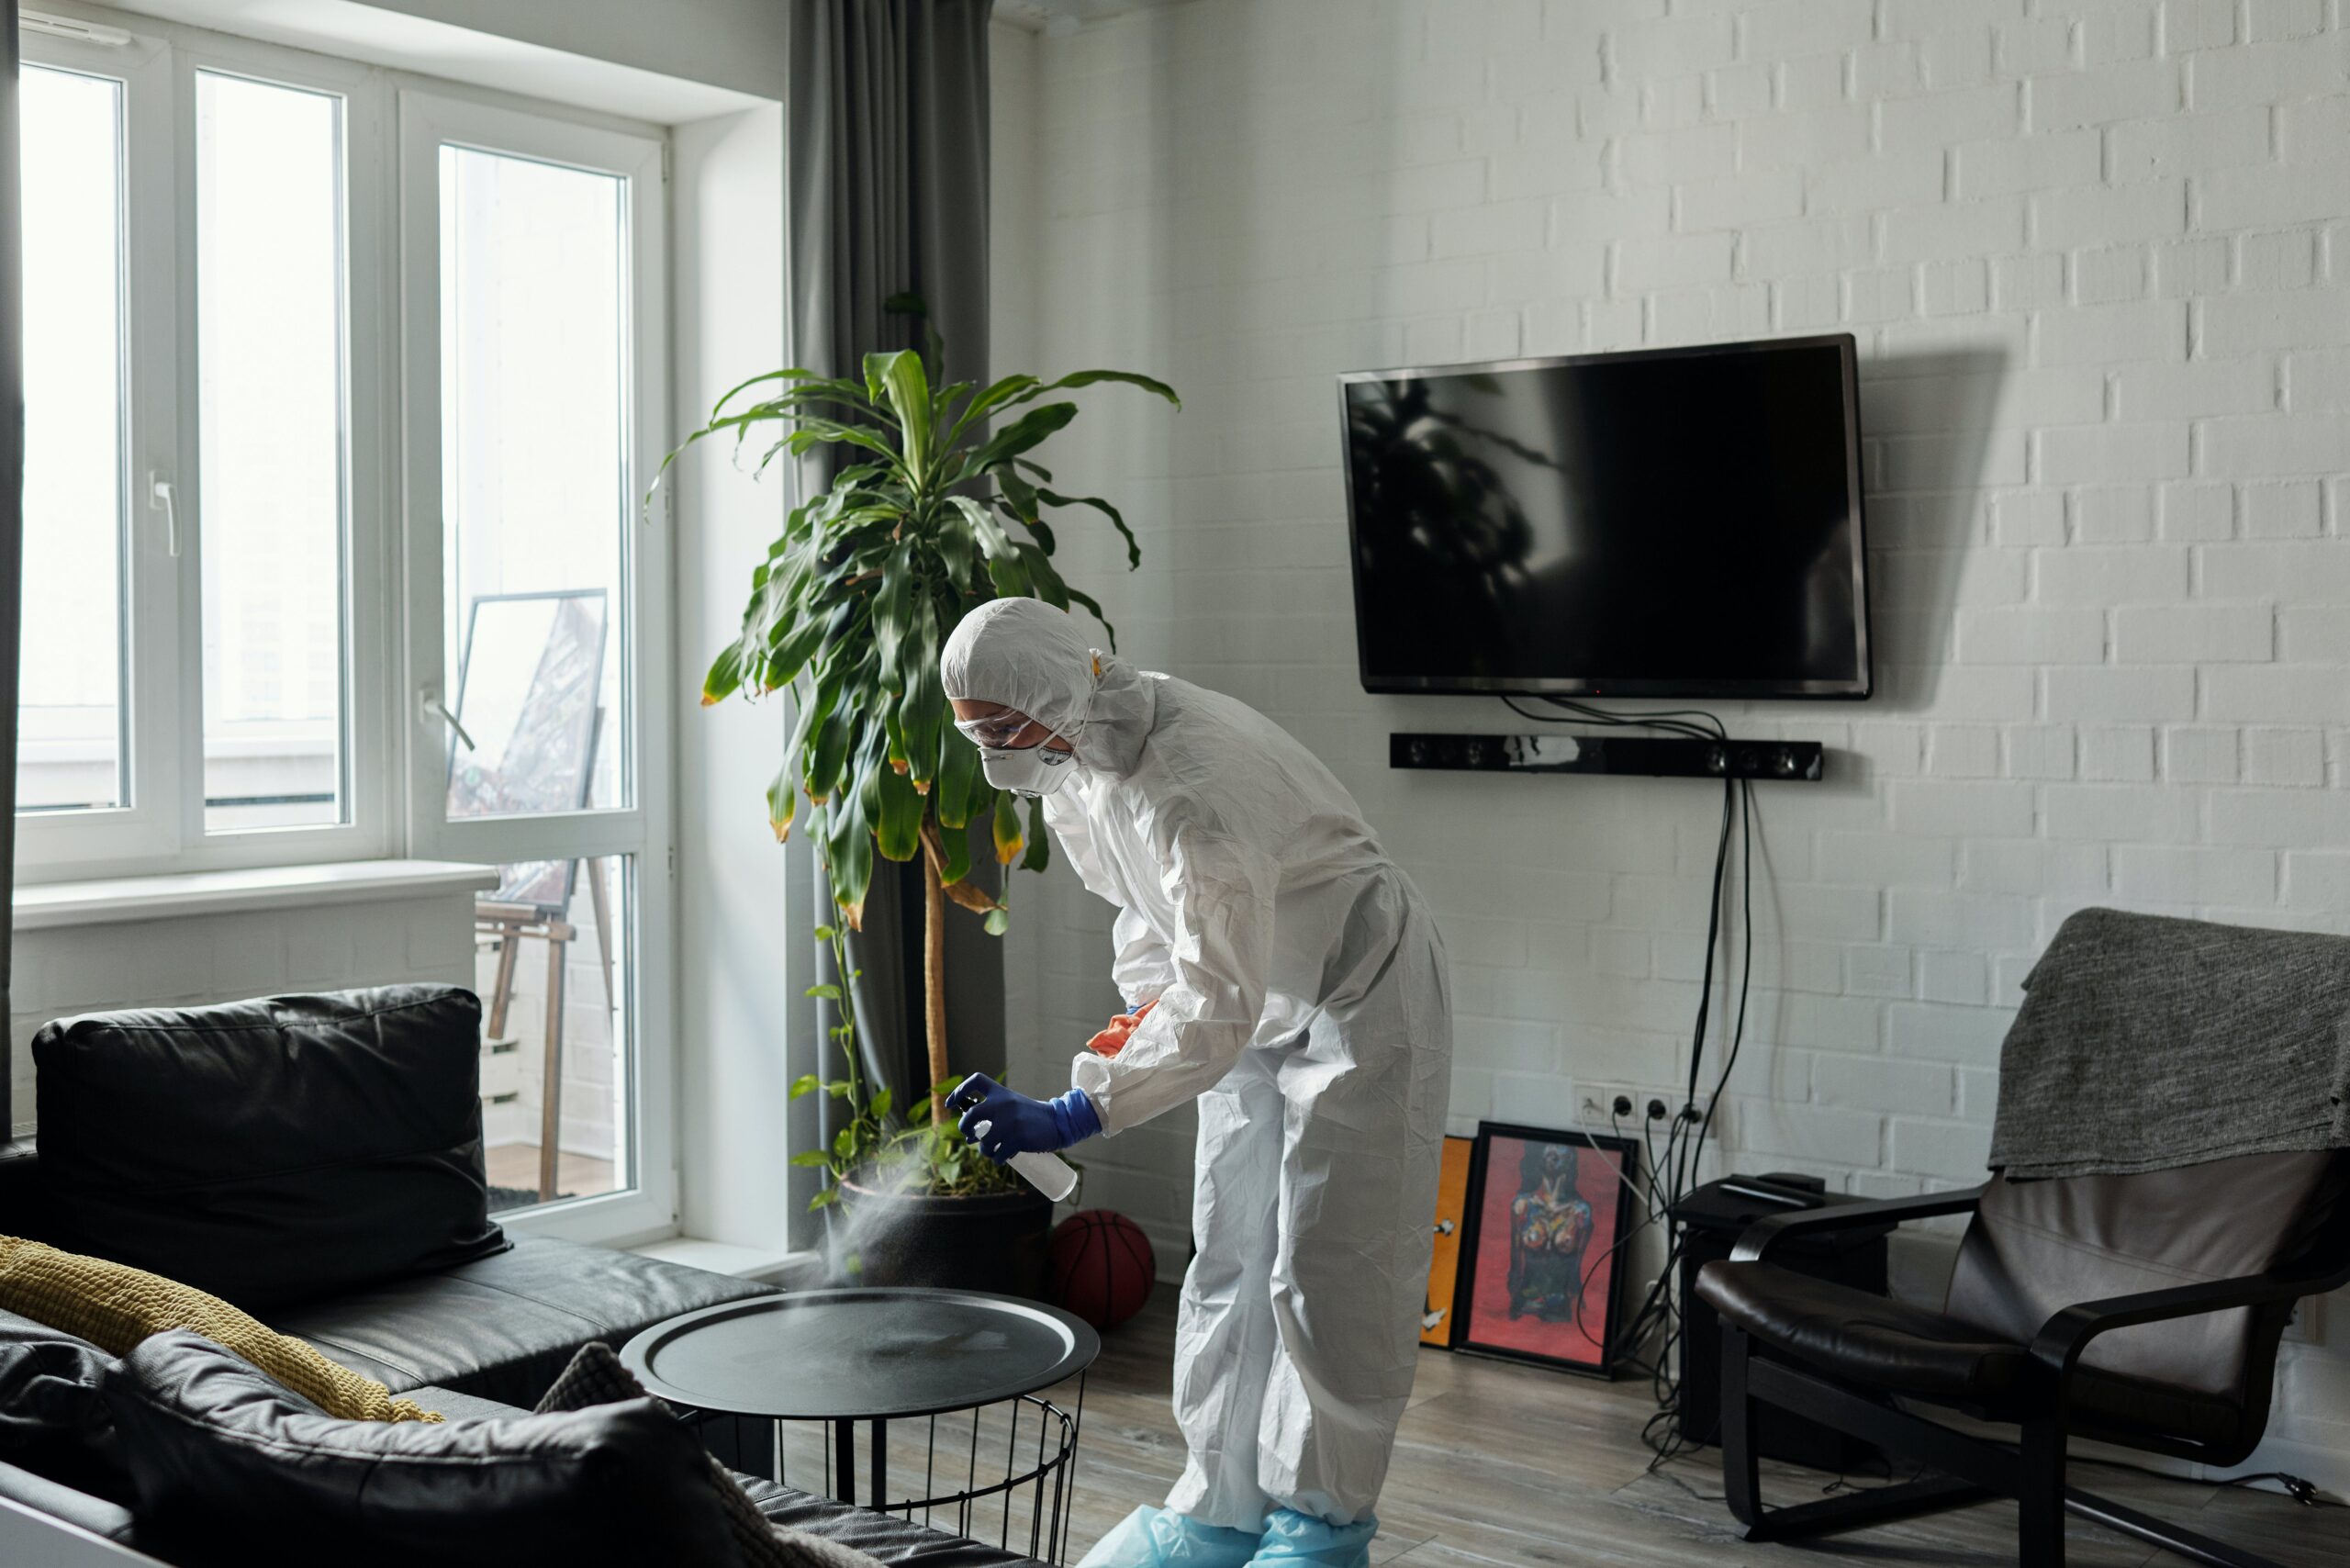 Person cleaning in hazmat suit